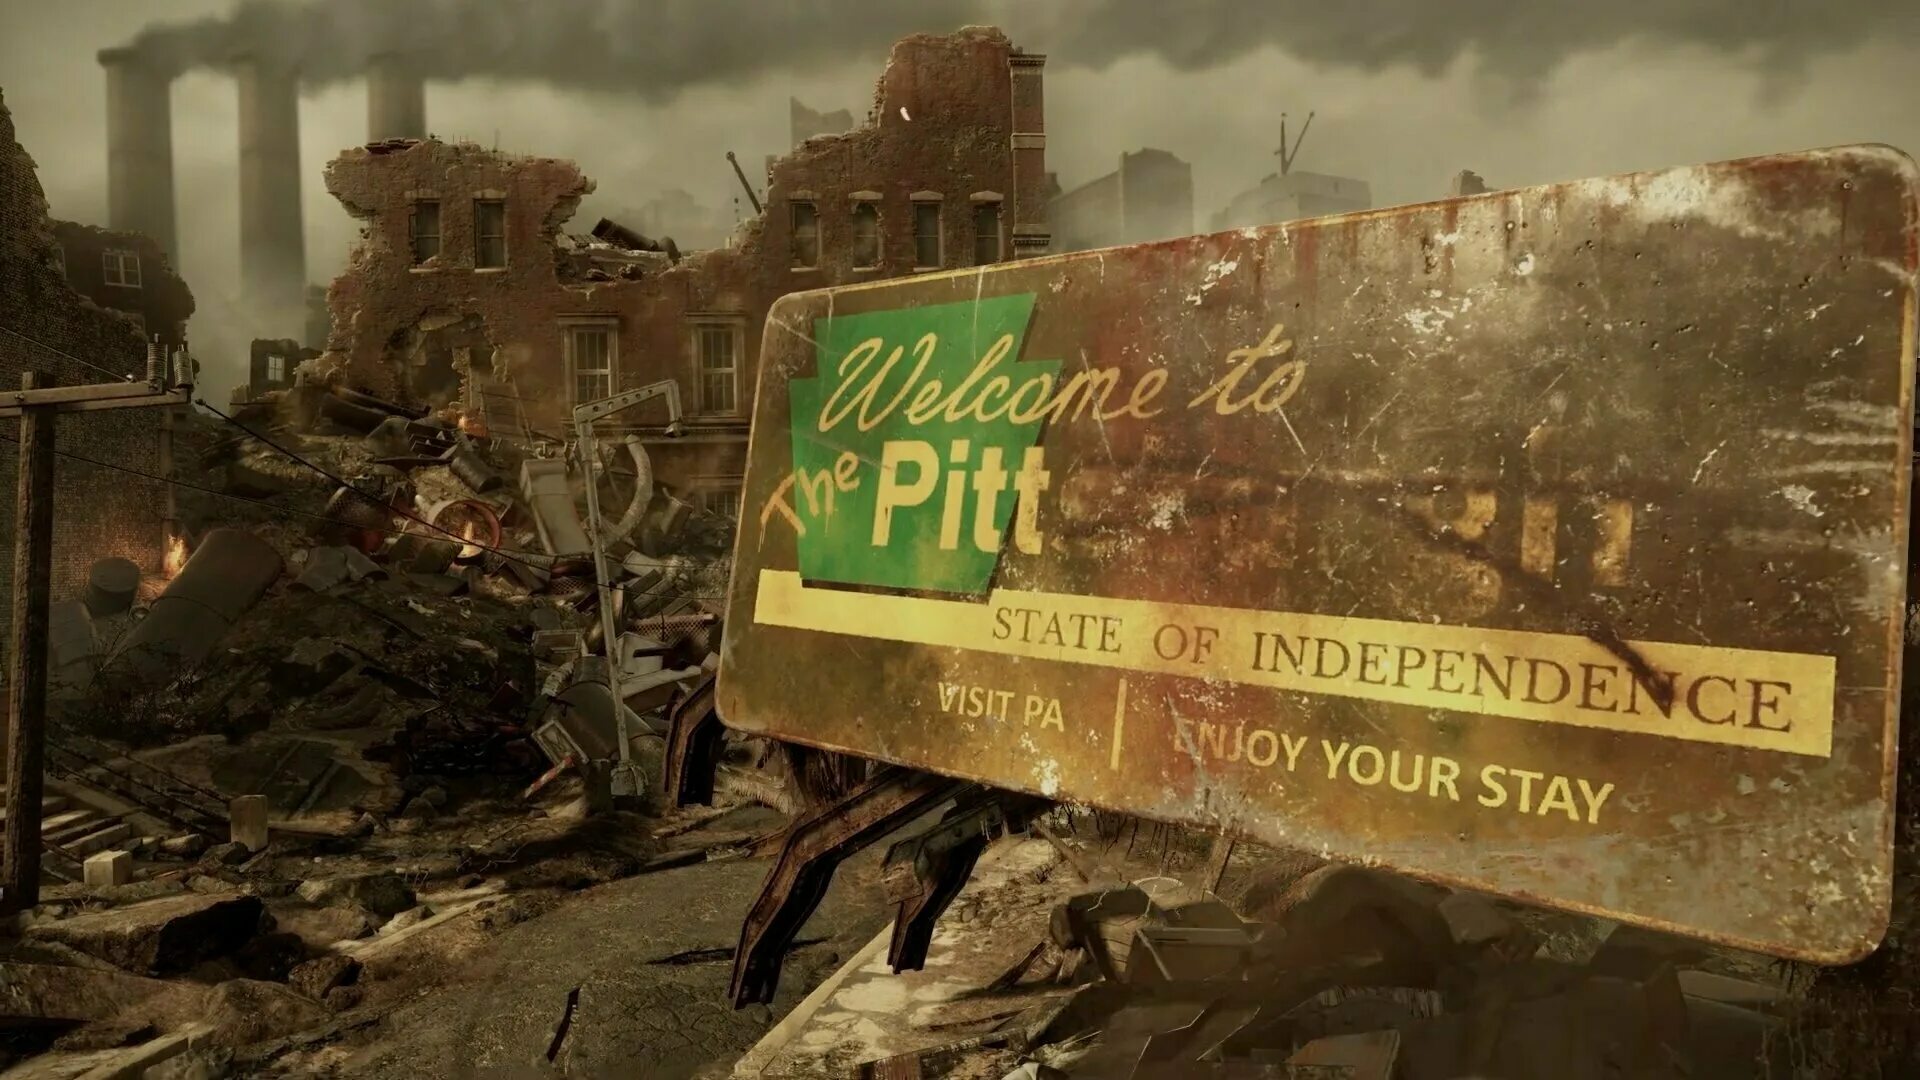 Питт фоллаут. Fallout 76 Expeditions the Pitt. Фоллаут 76 the Pitt. Fallout 76 the Pitt карта. Экспедиция в Питт фоллаут 76.